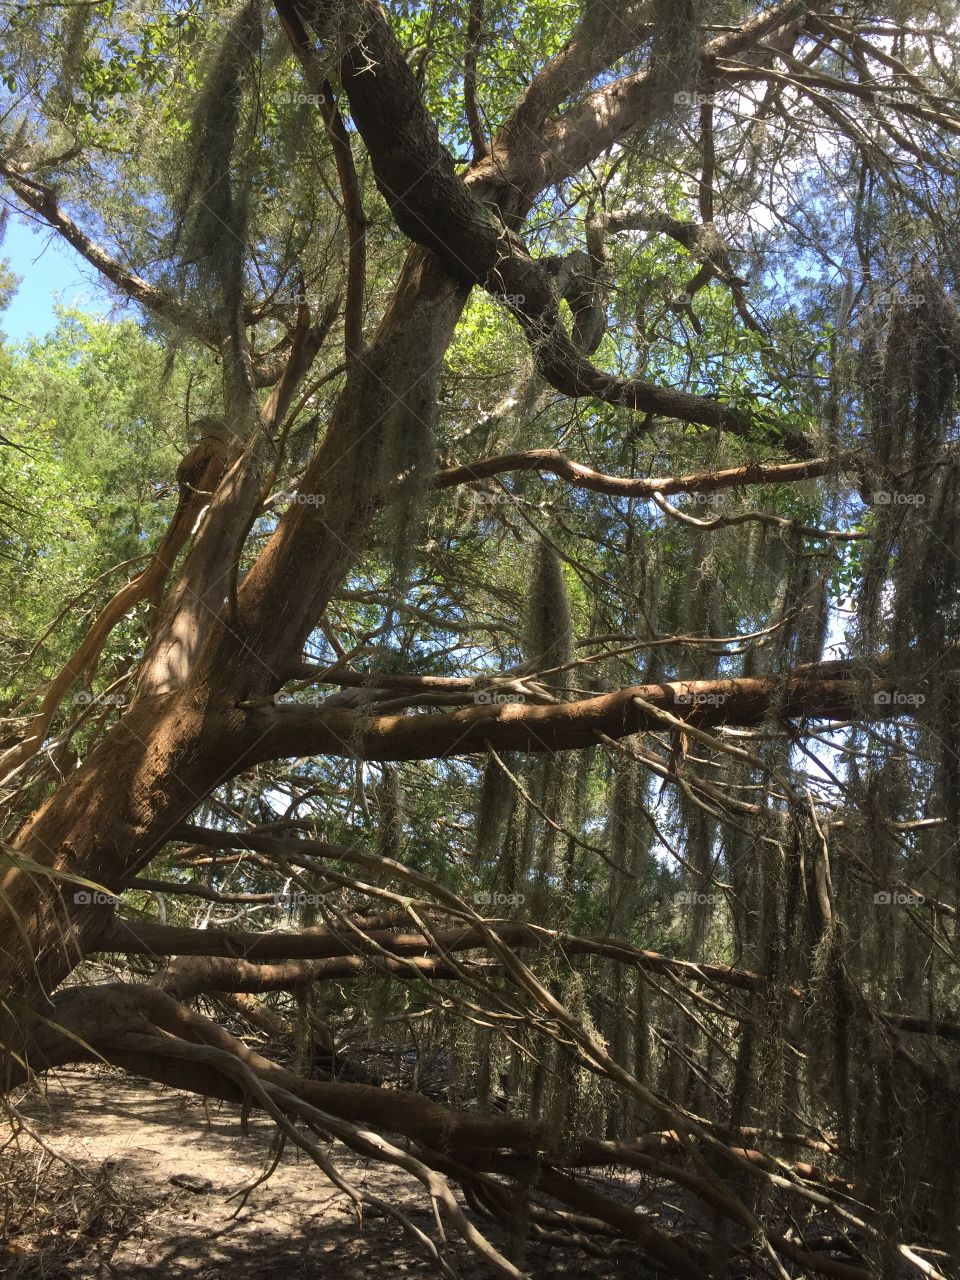 Spanish moss drapes trees at Wormsloe state historic park near Savannah Georgia.